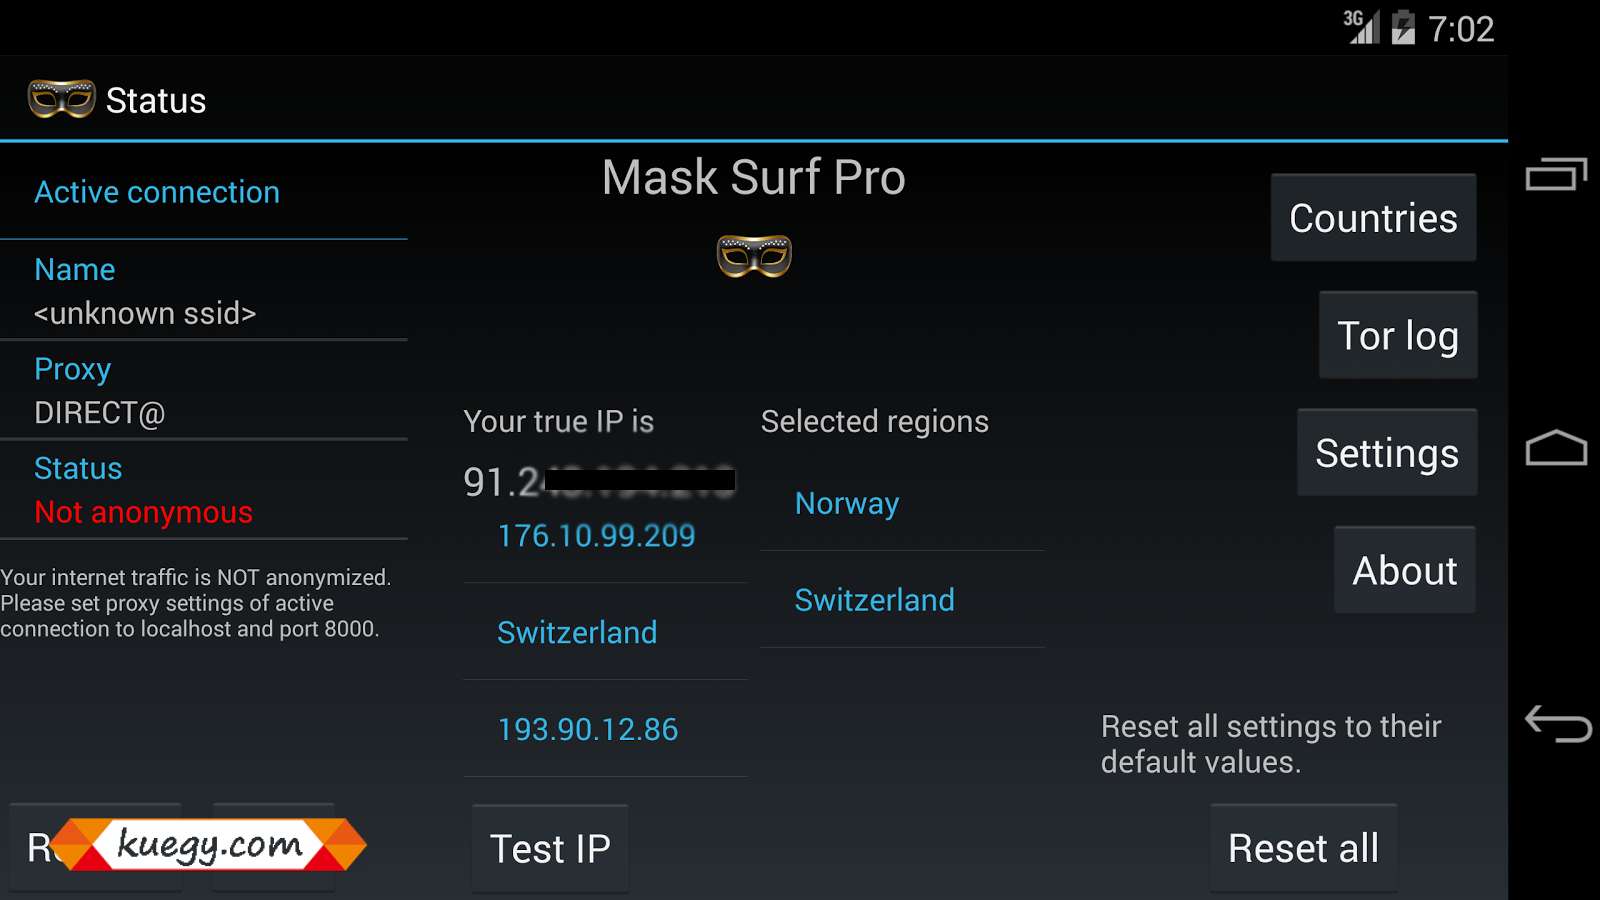 Mask Surf Pro